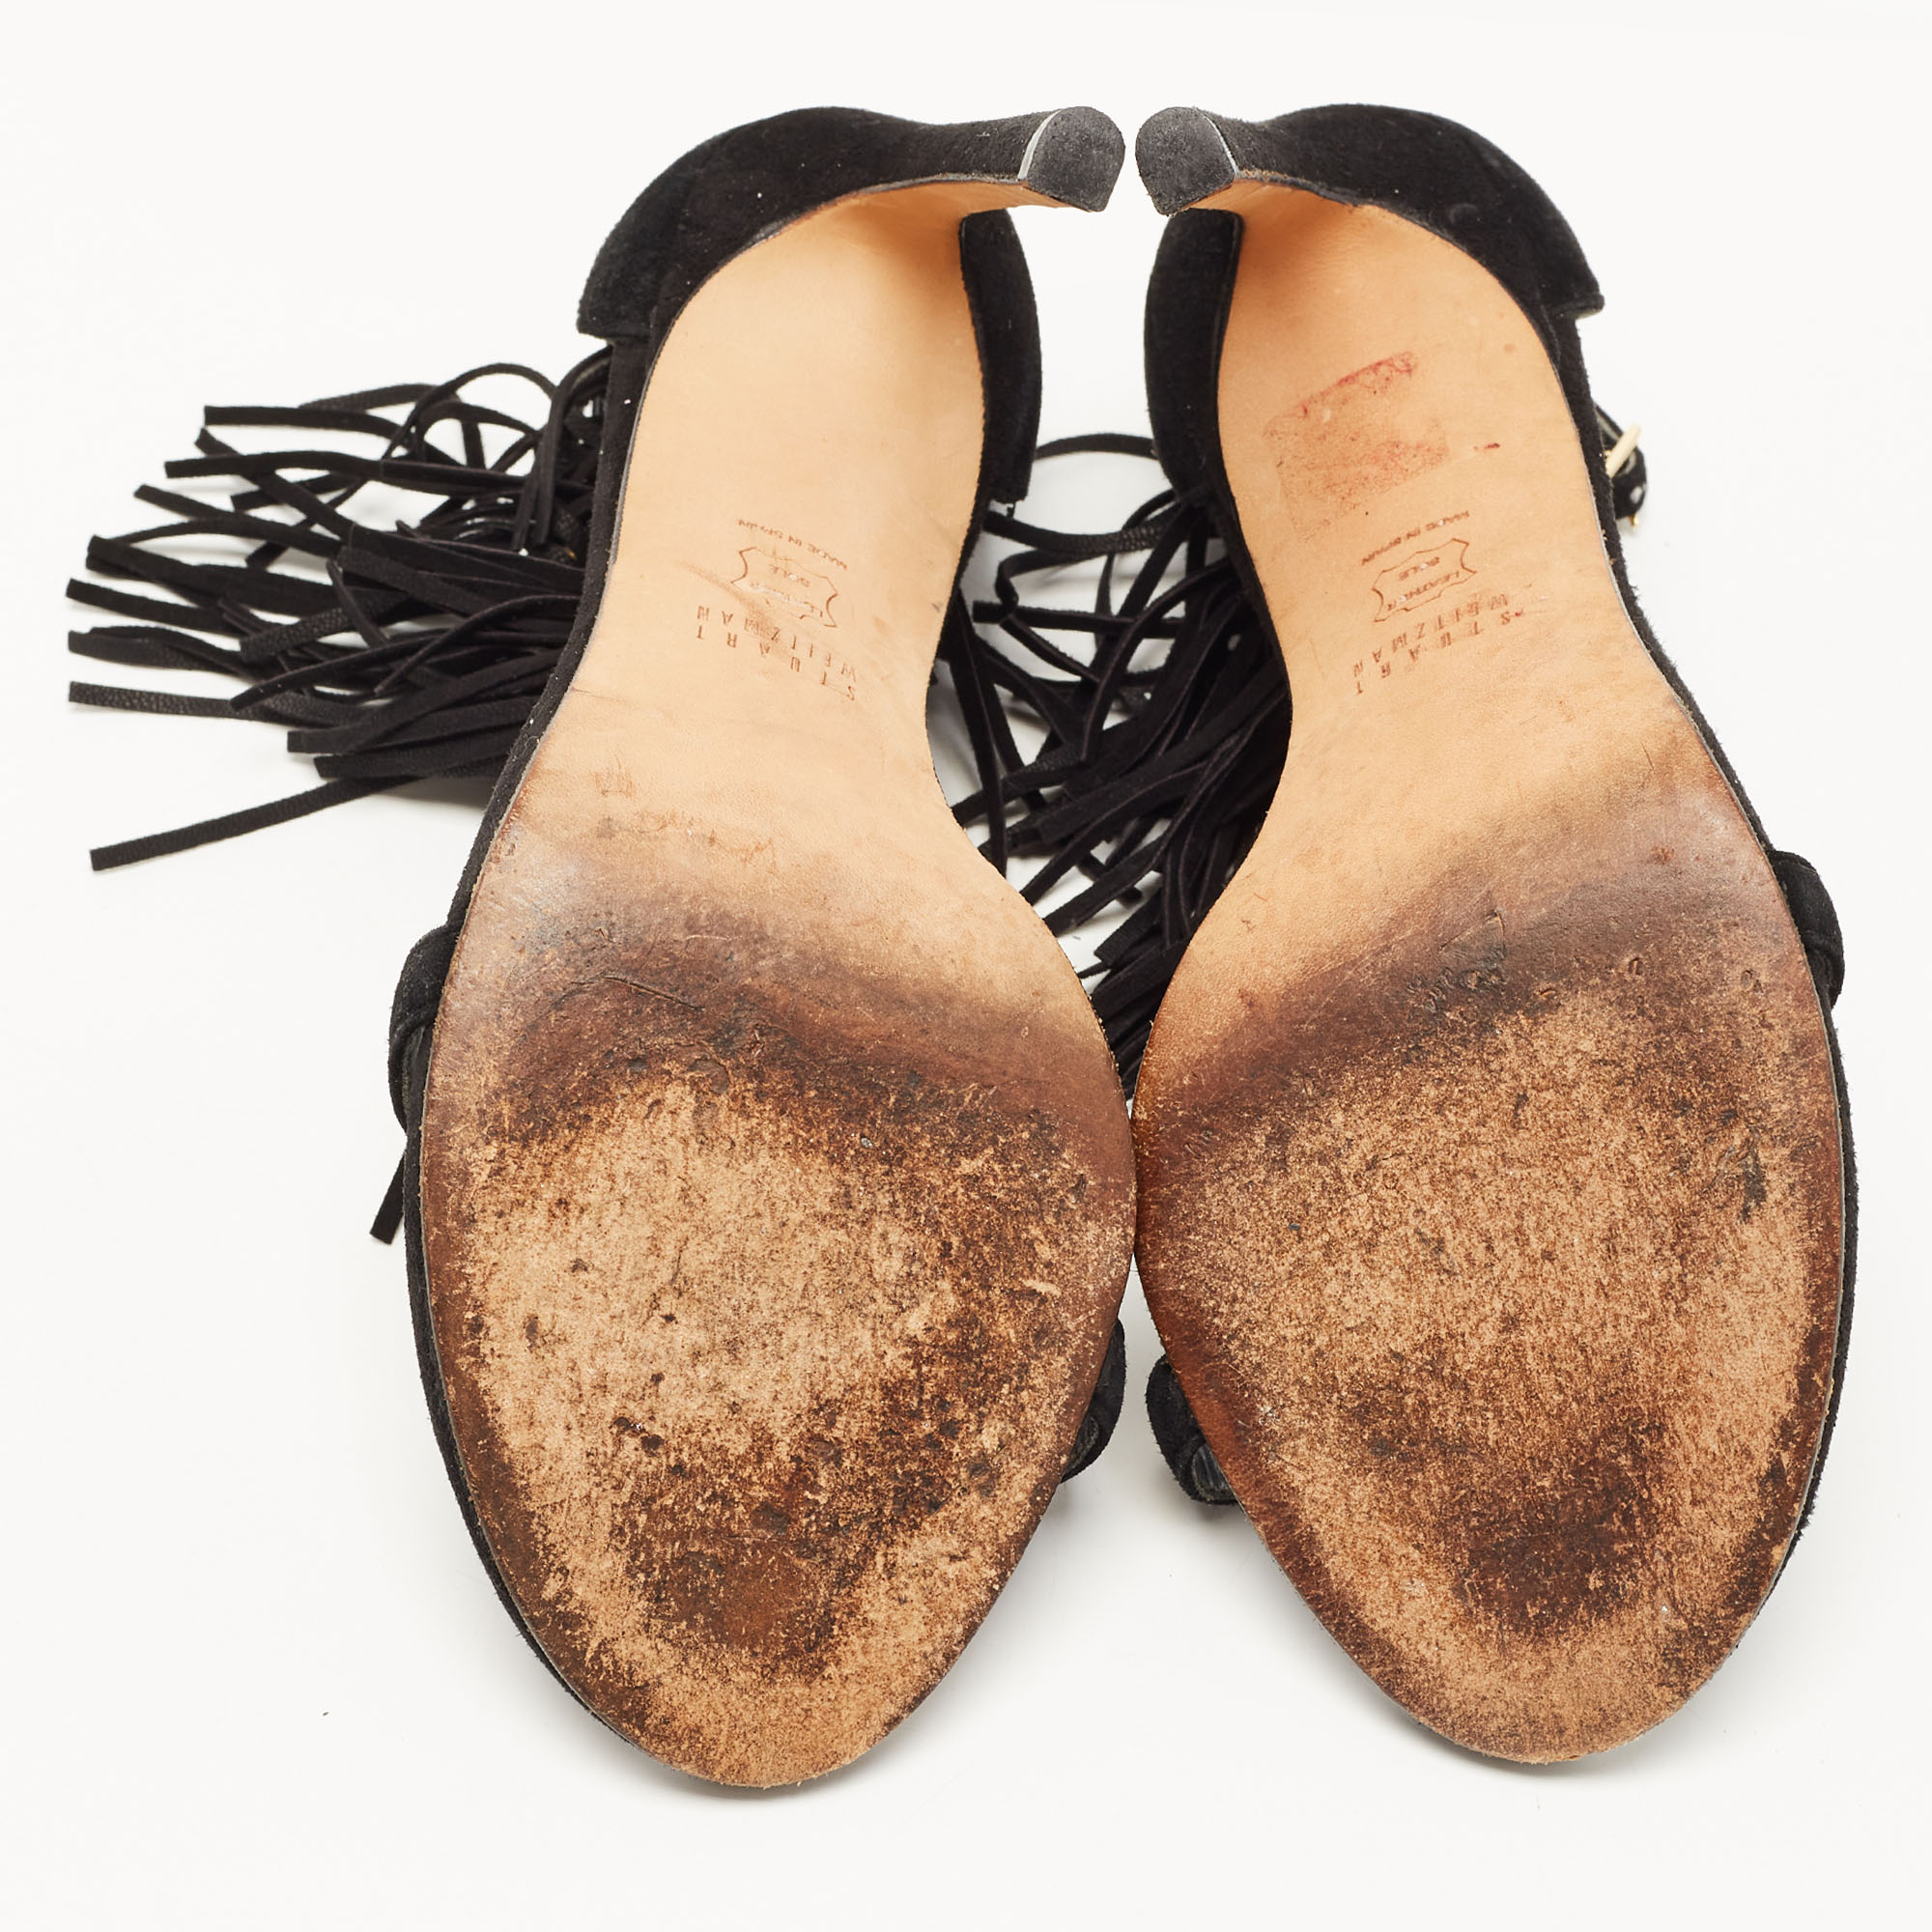 Stuart Weitzman Black Suede Love Fringe Ankle Strap Sandals Size 37.5